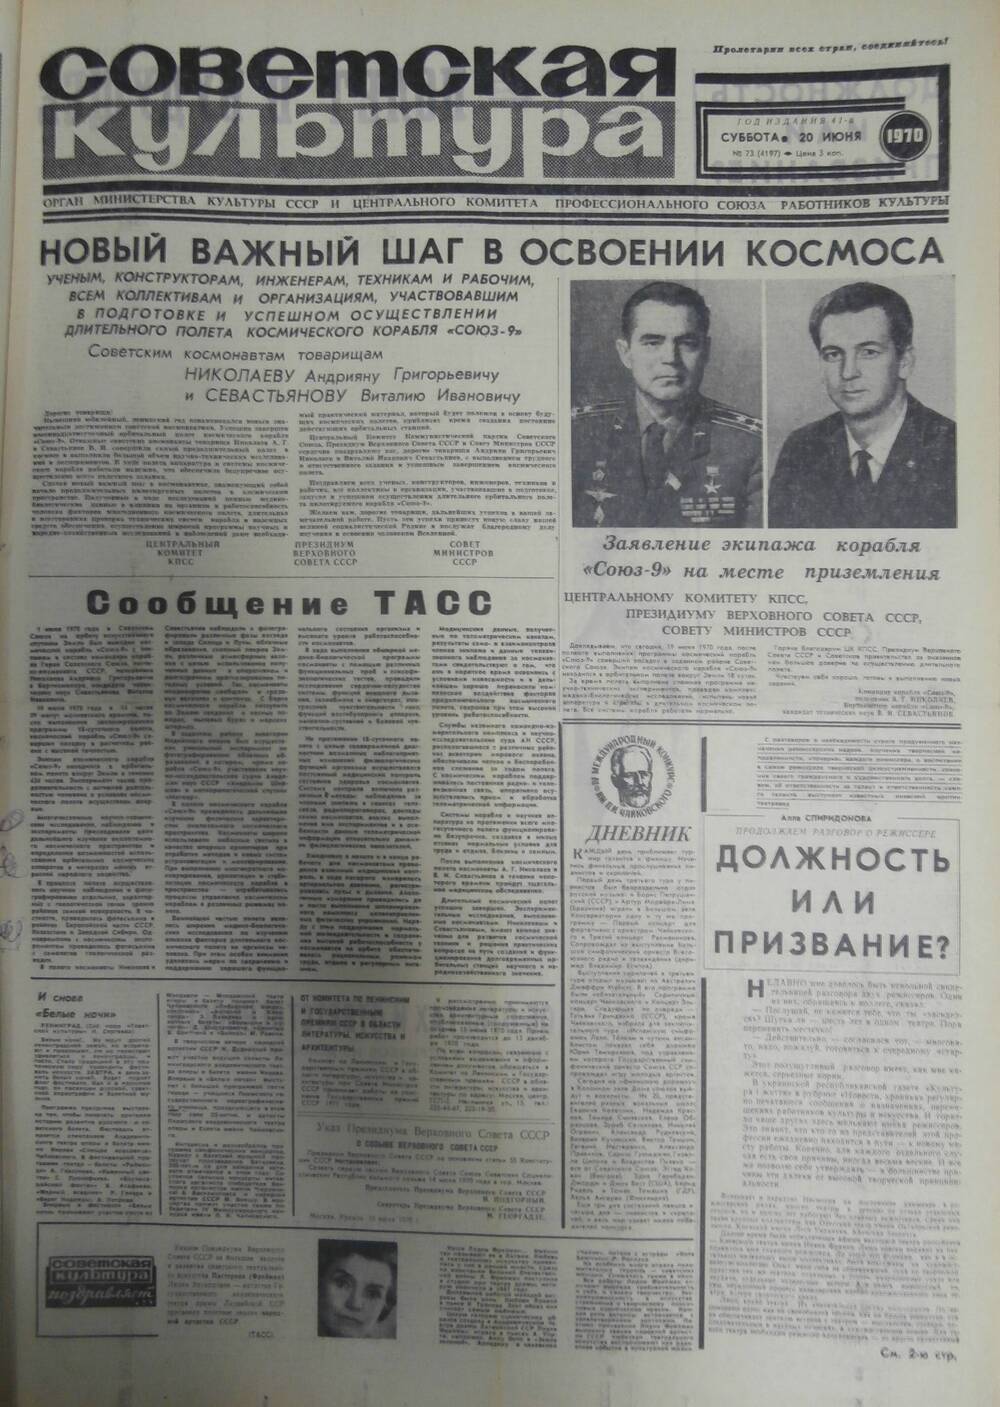 Газета «Советская культура» за 1970 г. Июнь № 6